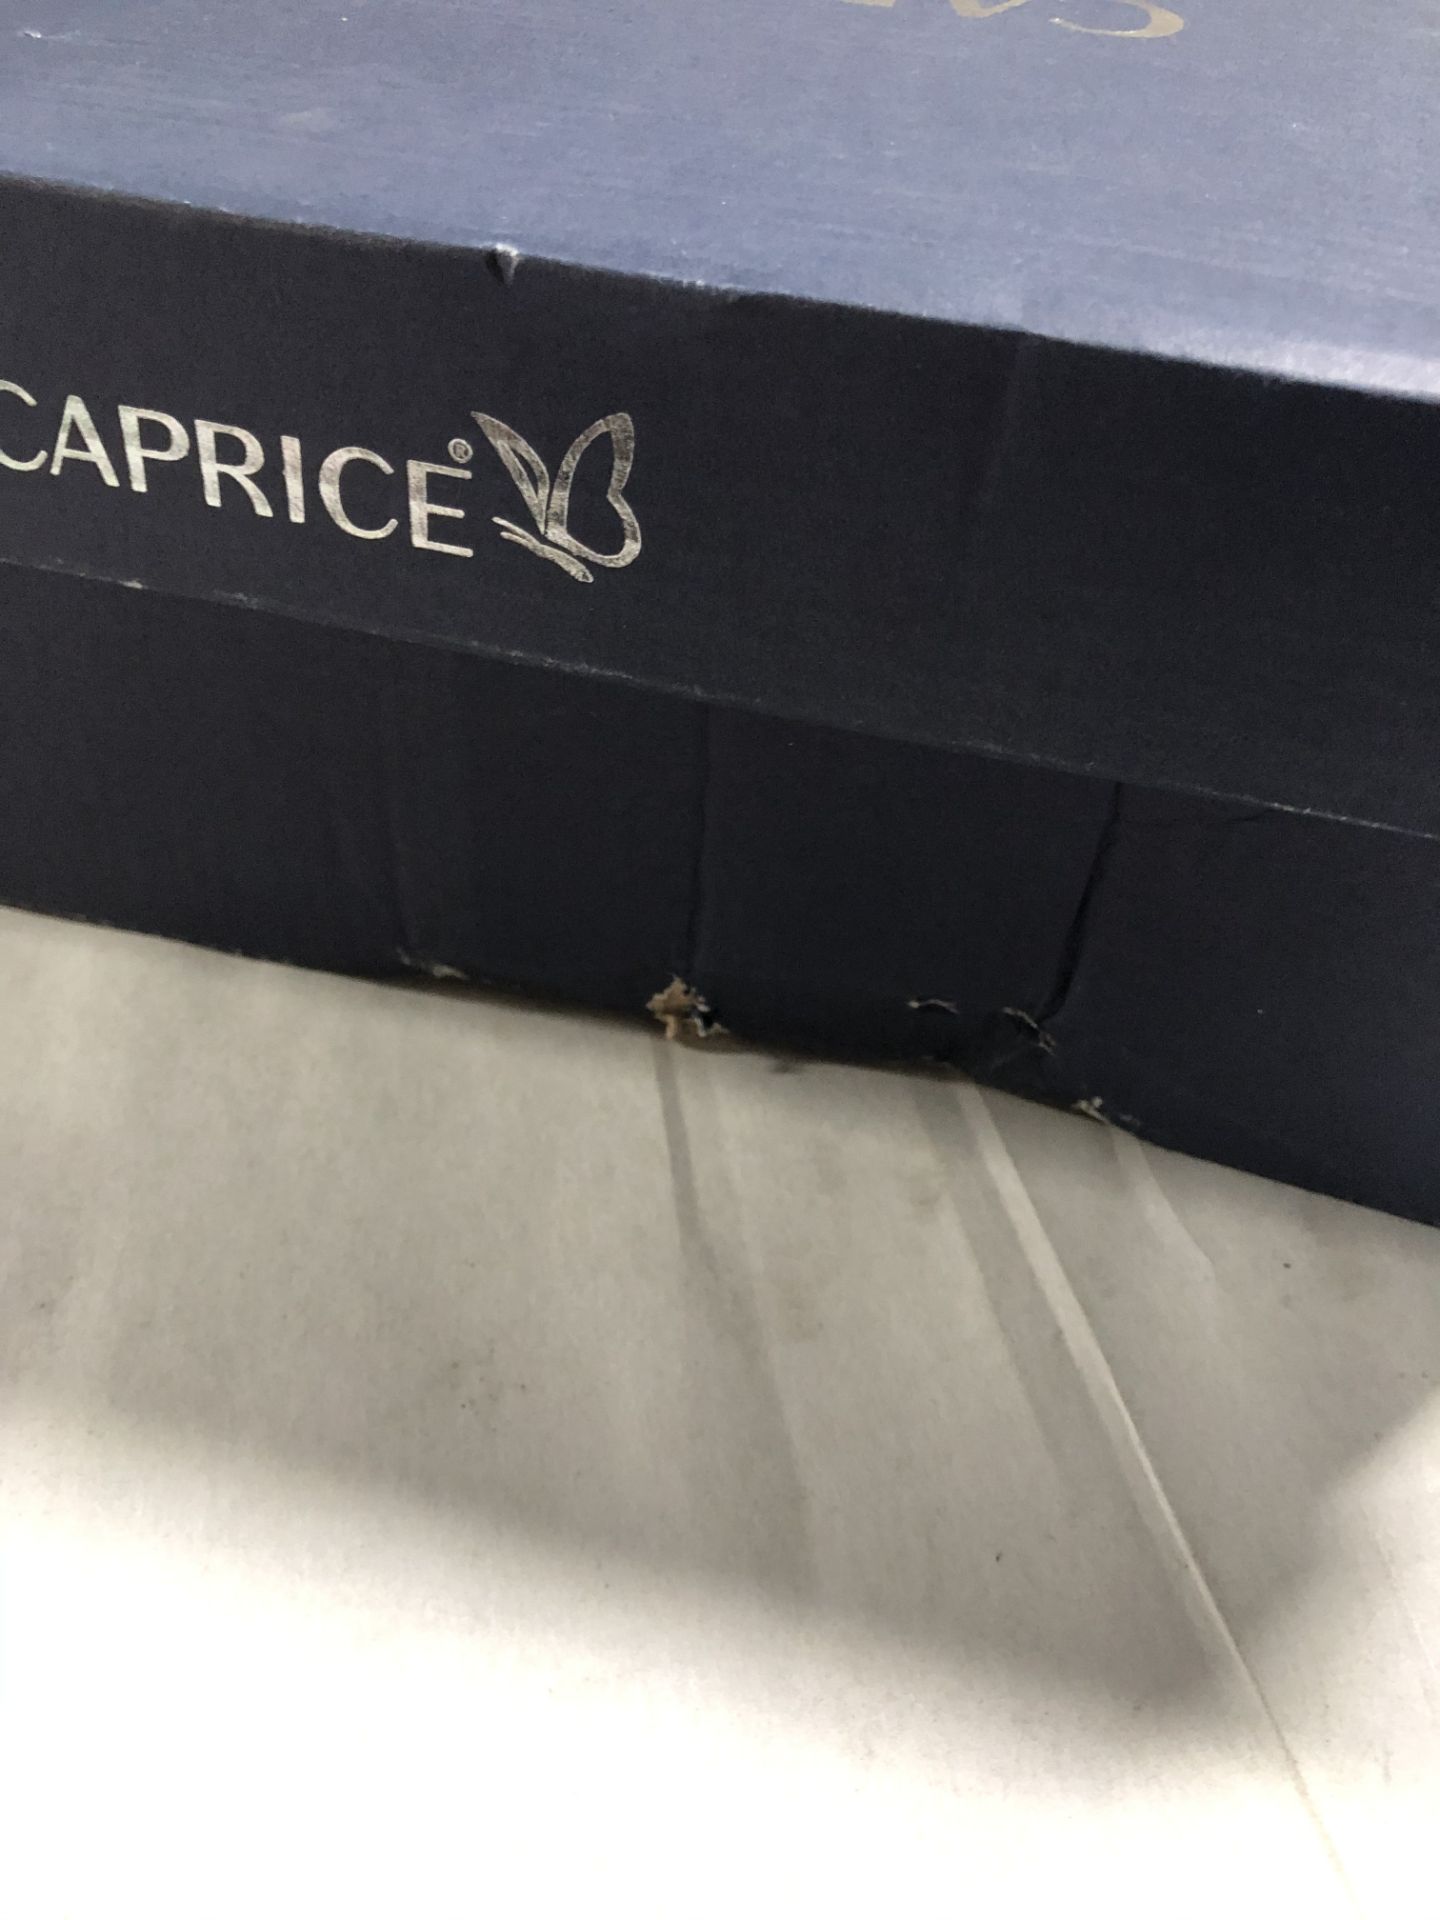 Caprice Sandals. UK 4.5 - Image 4 of 5